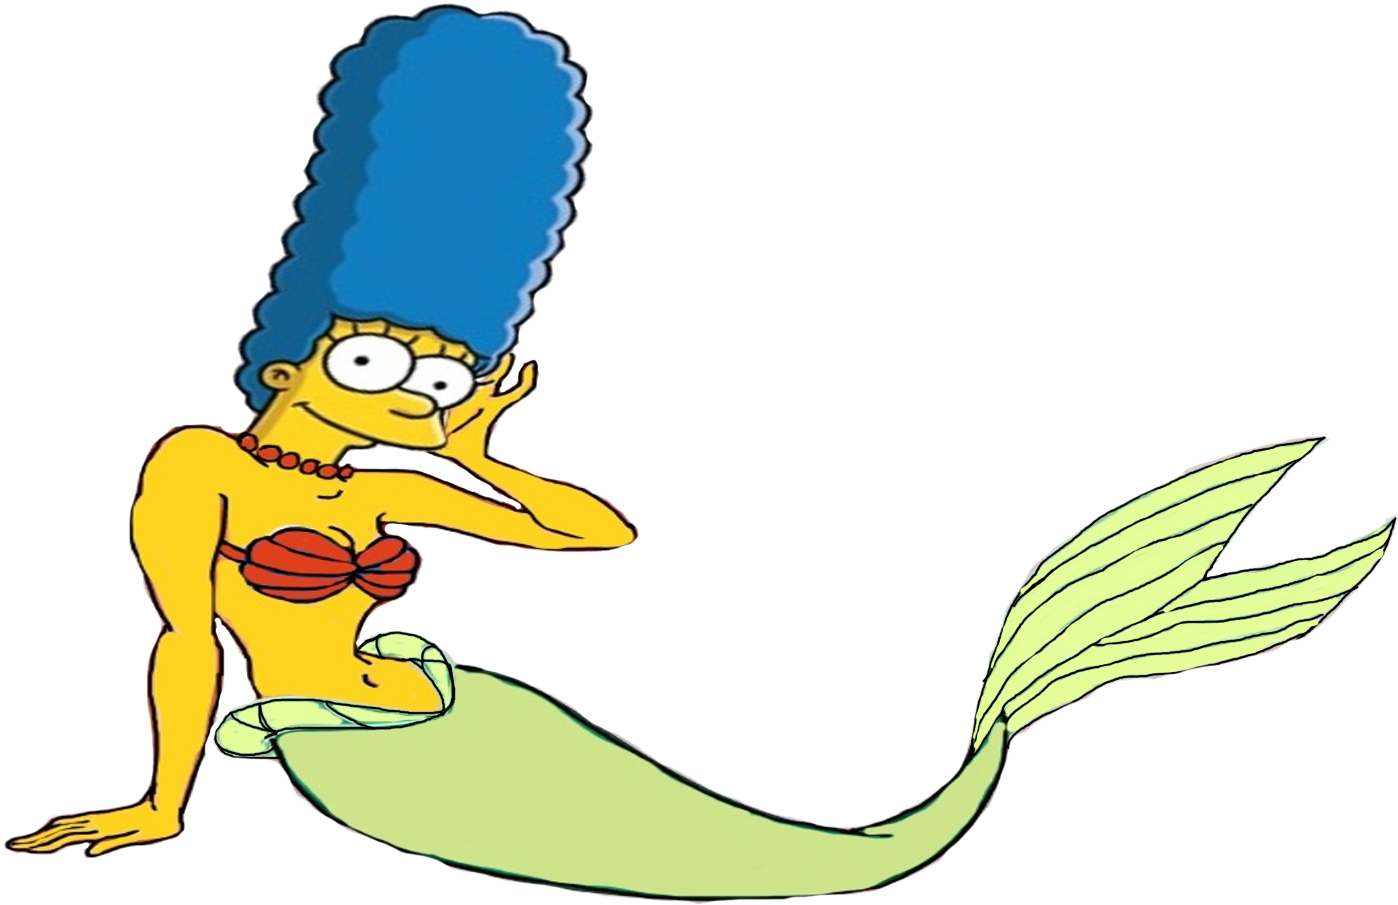 Marge Simpson As A Mermaid By Darthranner83 - Marge Simpson (1489x991)